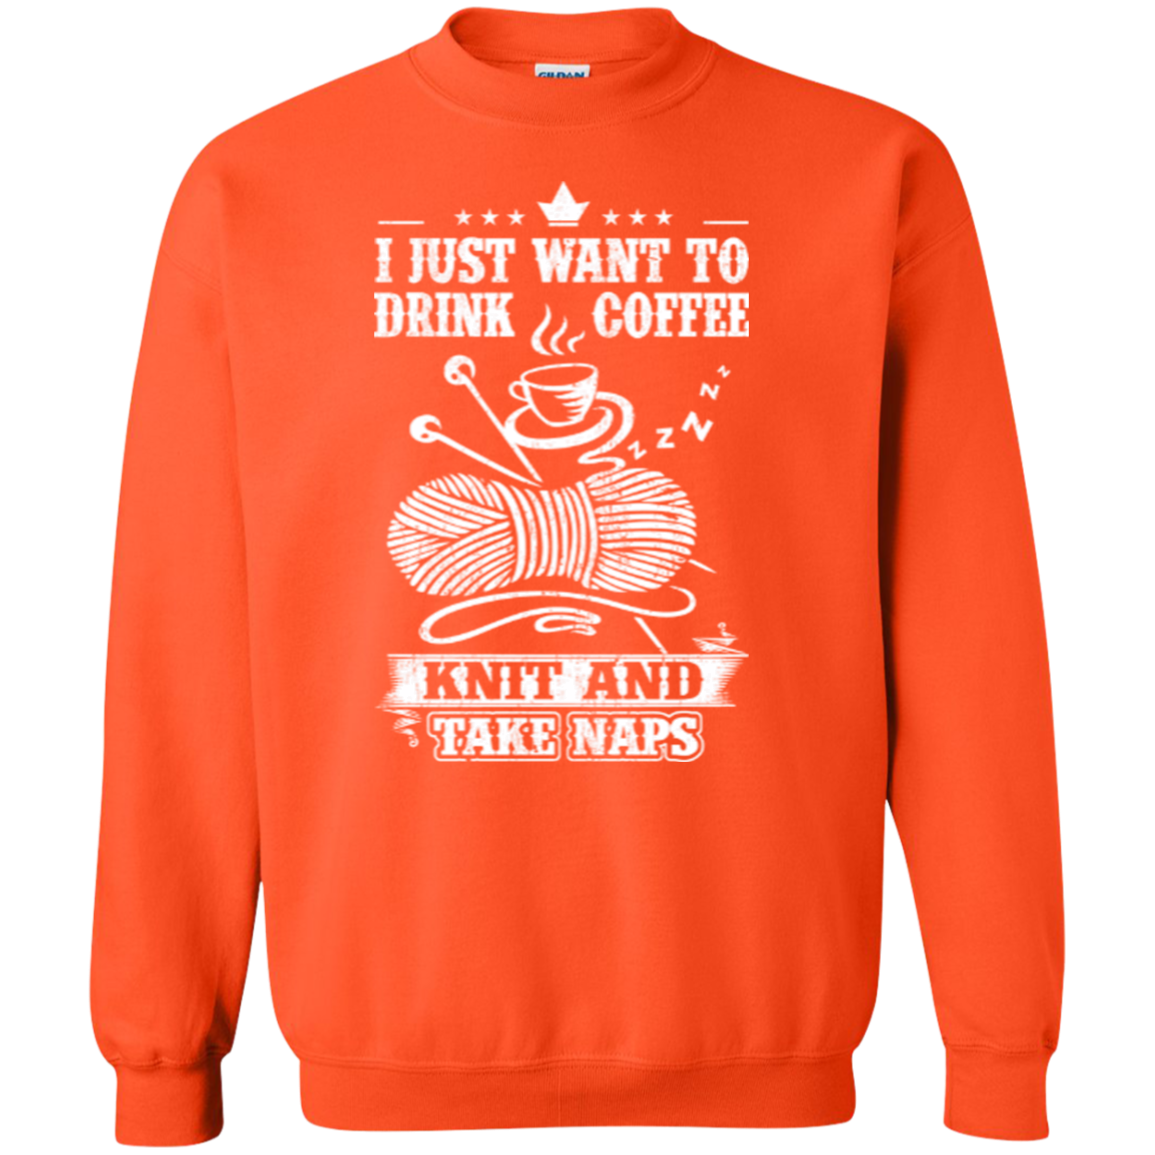 Coffee-Knit-Nap Crewneck Sweatshirt - Crafter4Life - 3